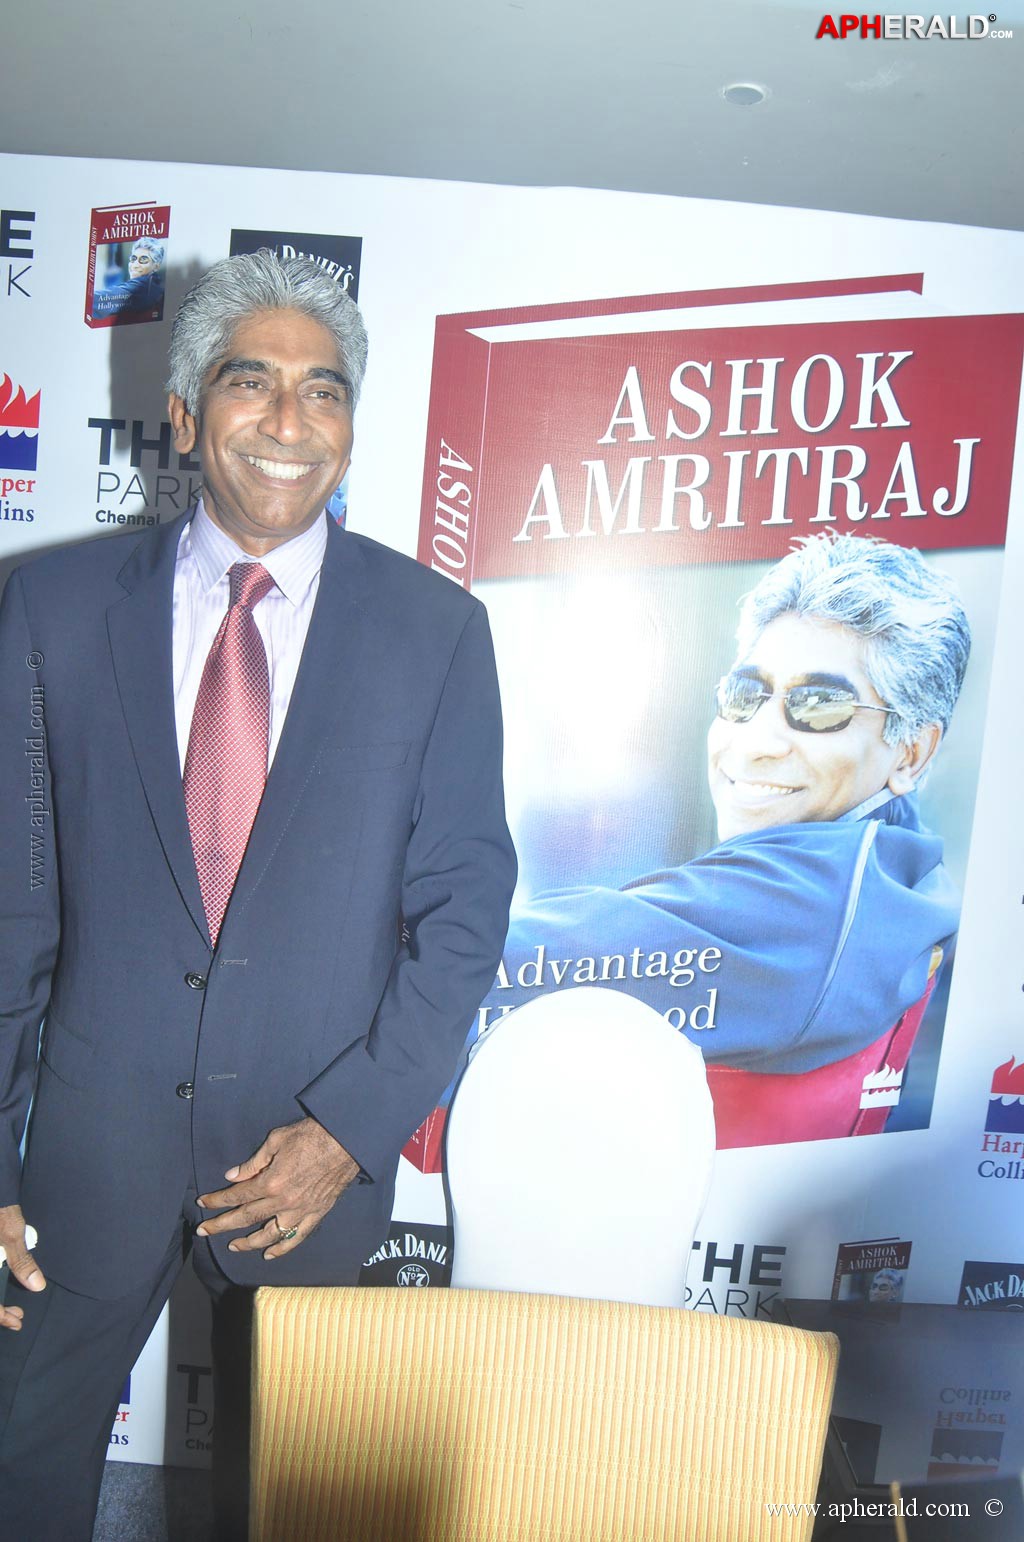 Ashok Amritraj's Advantage Hollywood Book